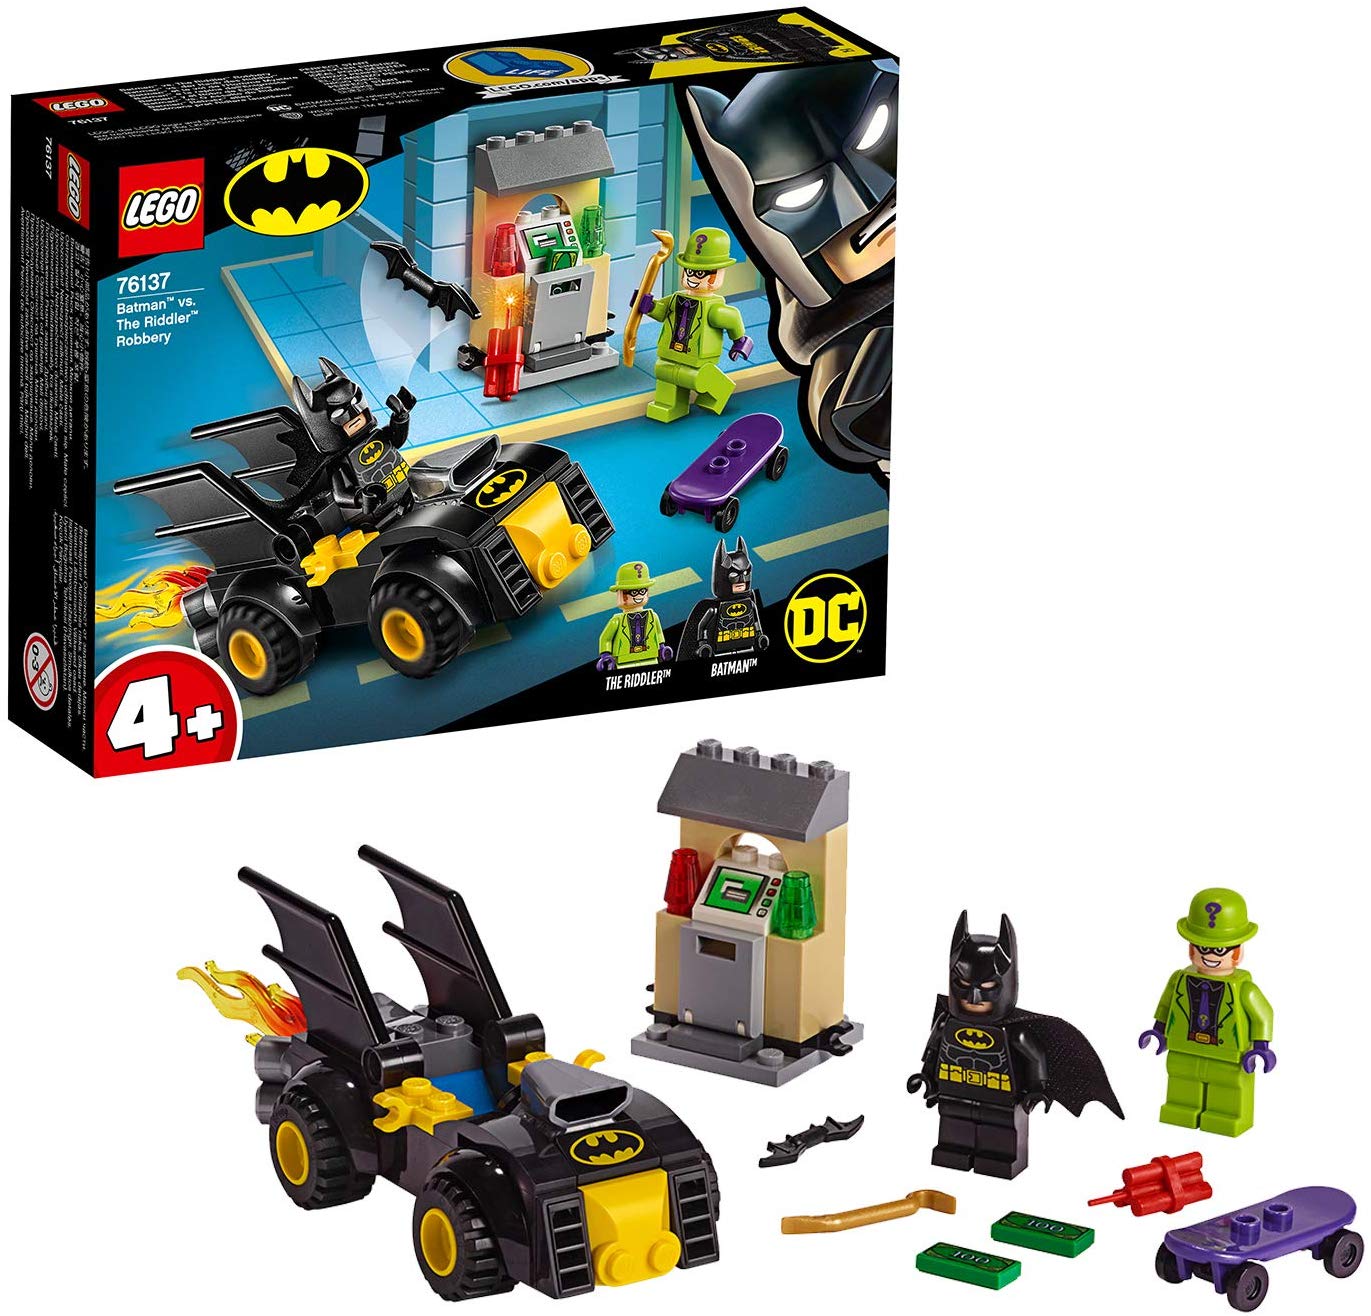 LEGO DC Universe Super Heroes Lego DC Batman 76137 Batman vs. The Robbery of the Riddler, Construction Ki